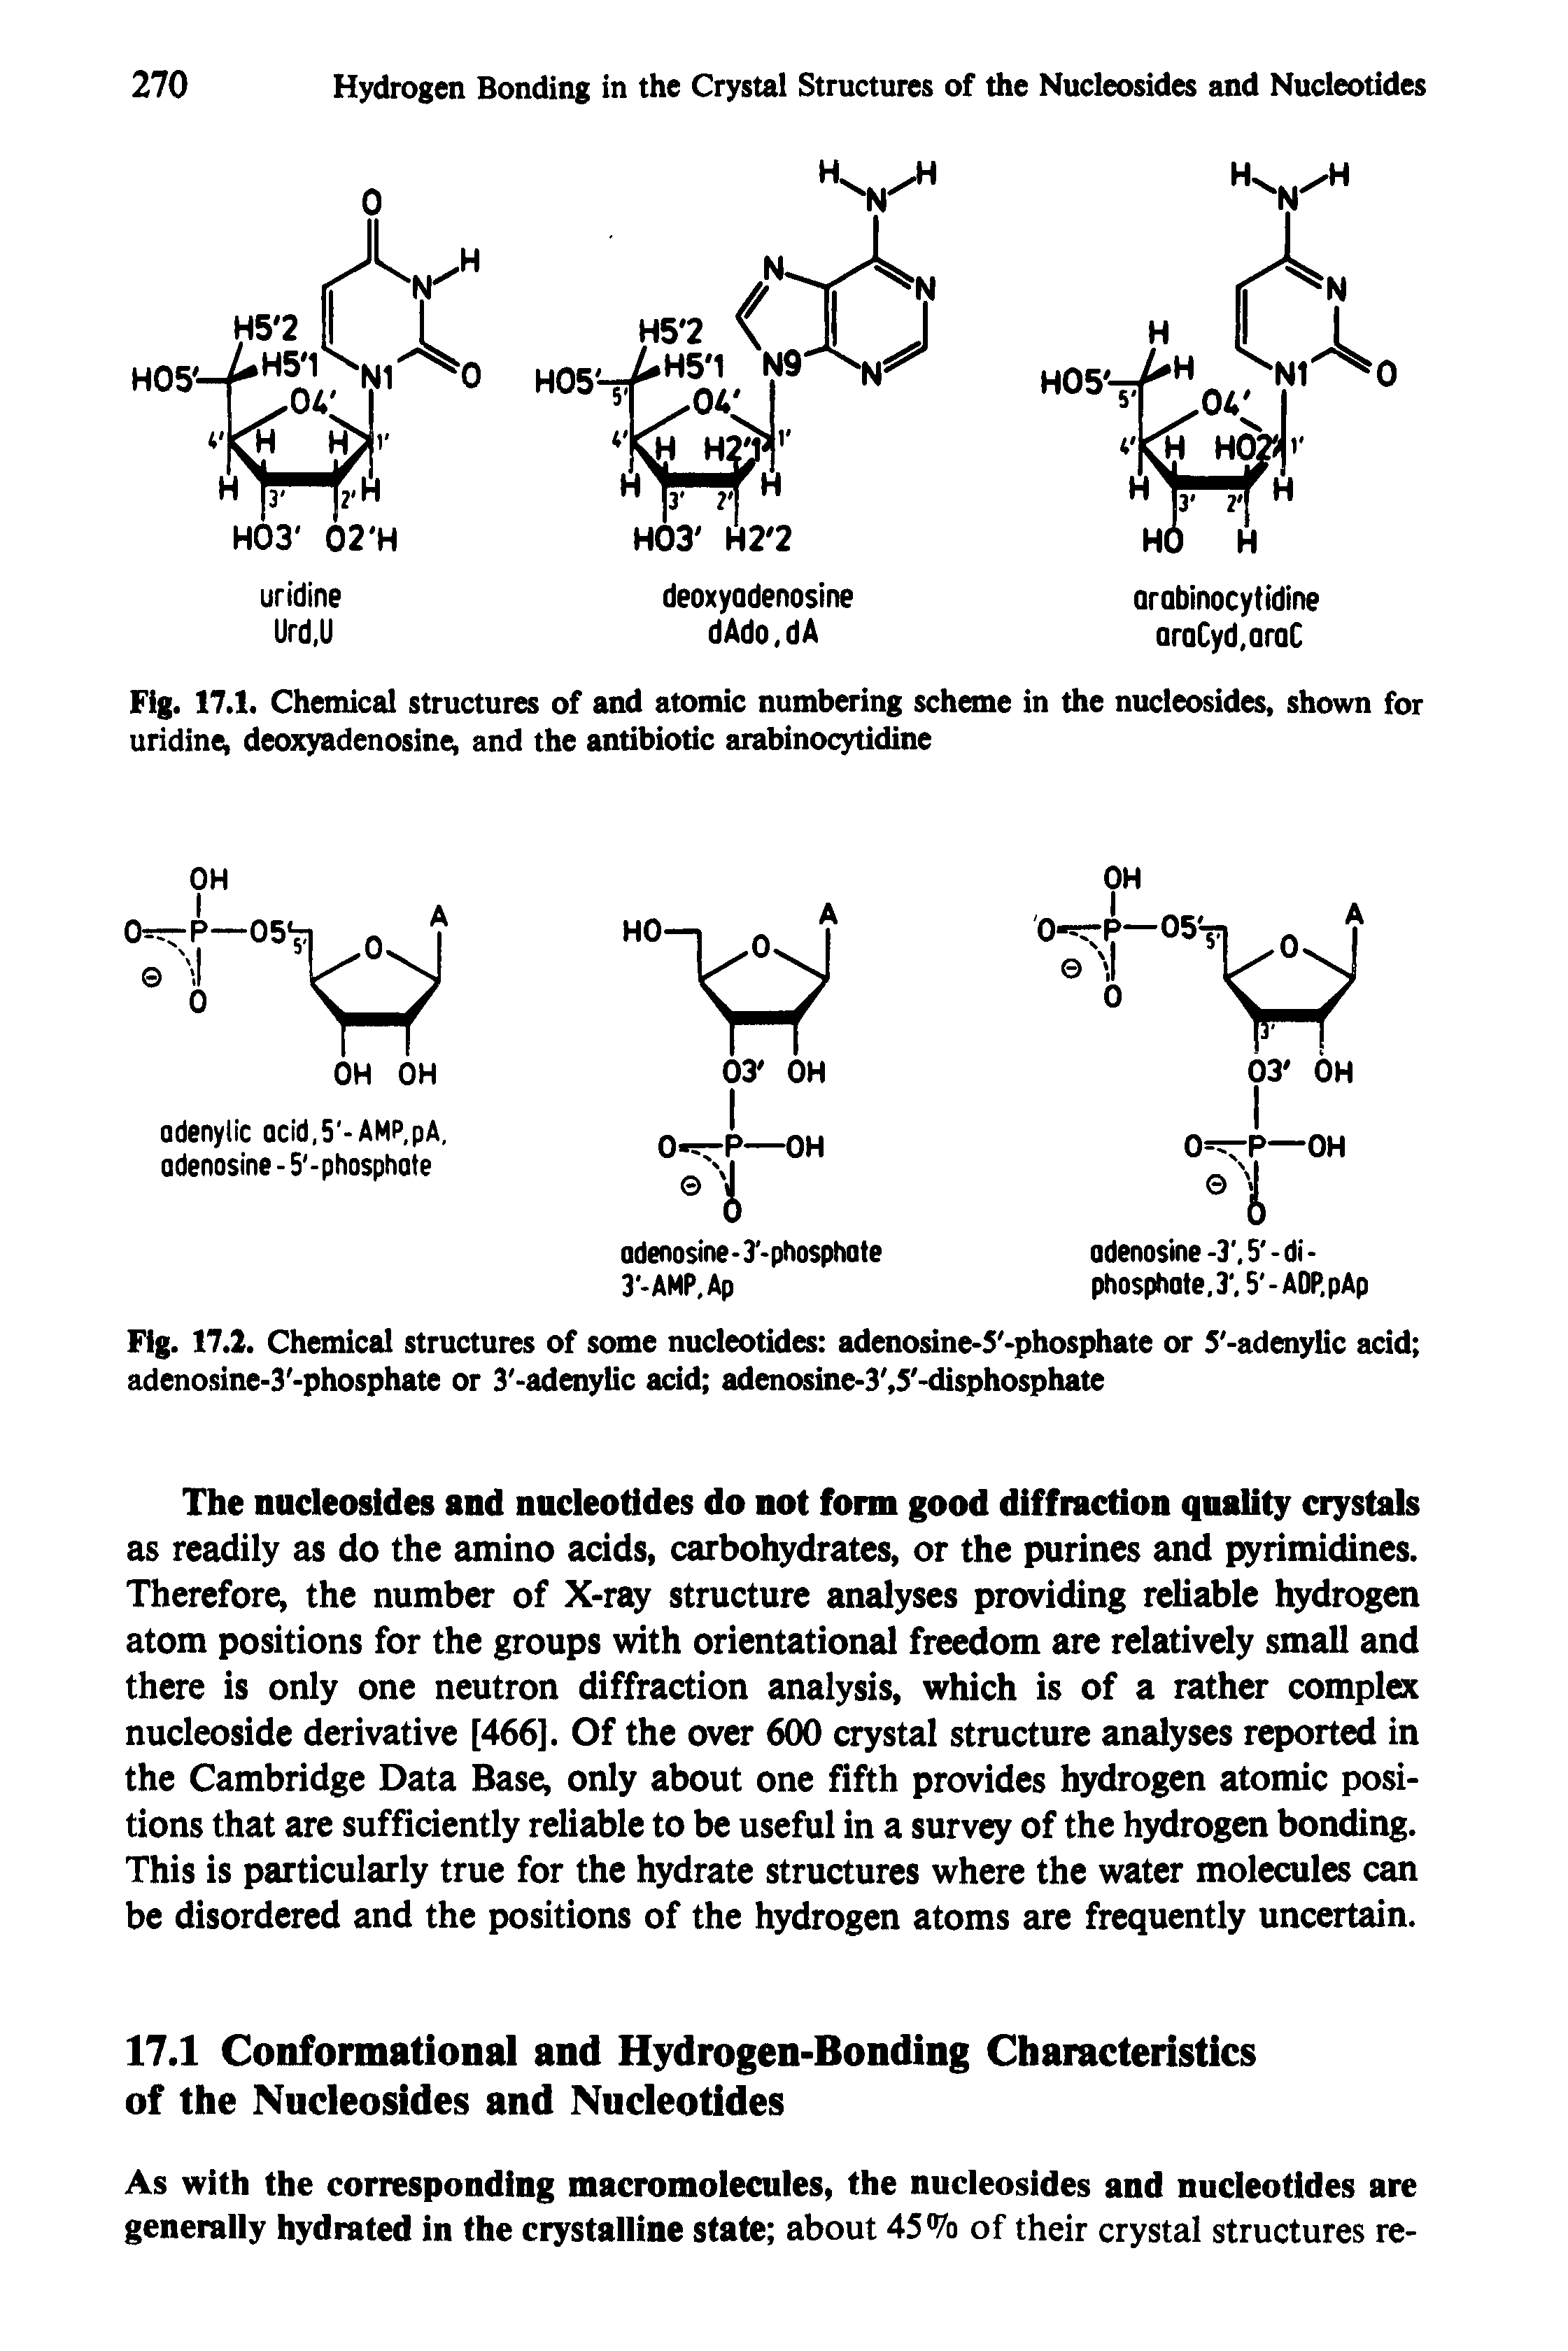 Fig. 17.2. Chemical structures of some nucleotides adenosine-5 -phosphate or 5 -adenylic acid adenosine-3 -phosphate or 3 -adenylic acid adenosine-3, S -disphosphate...